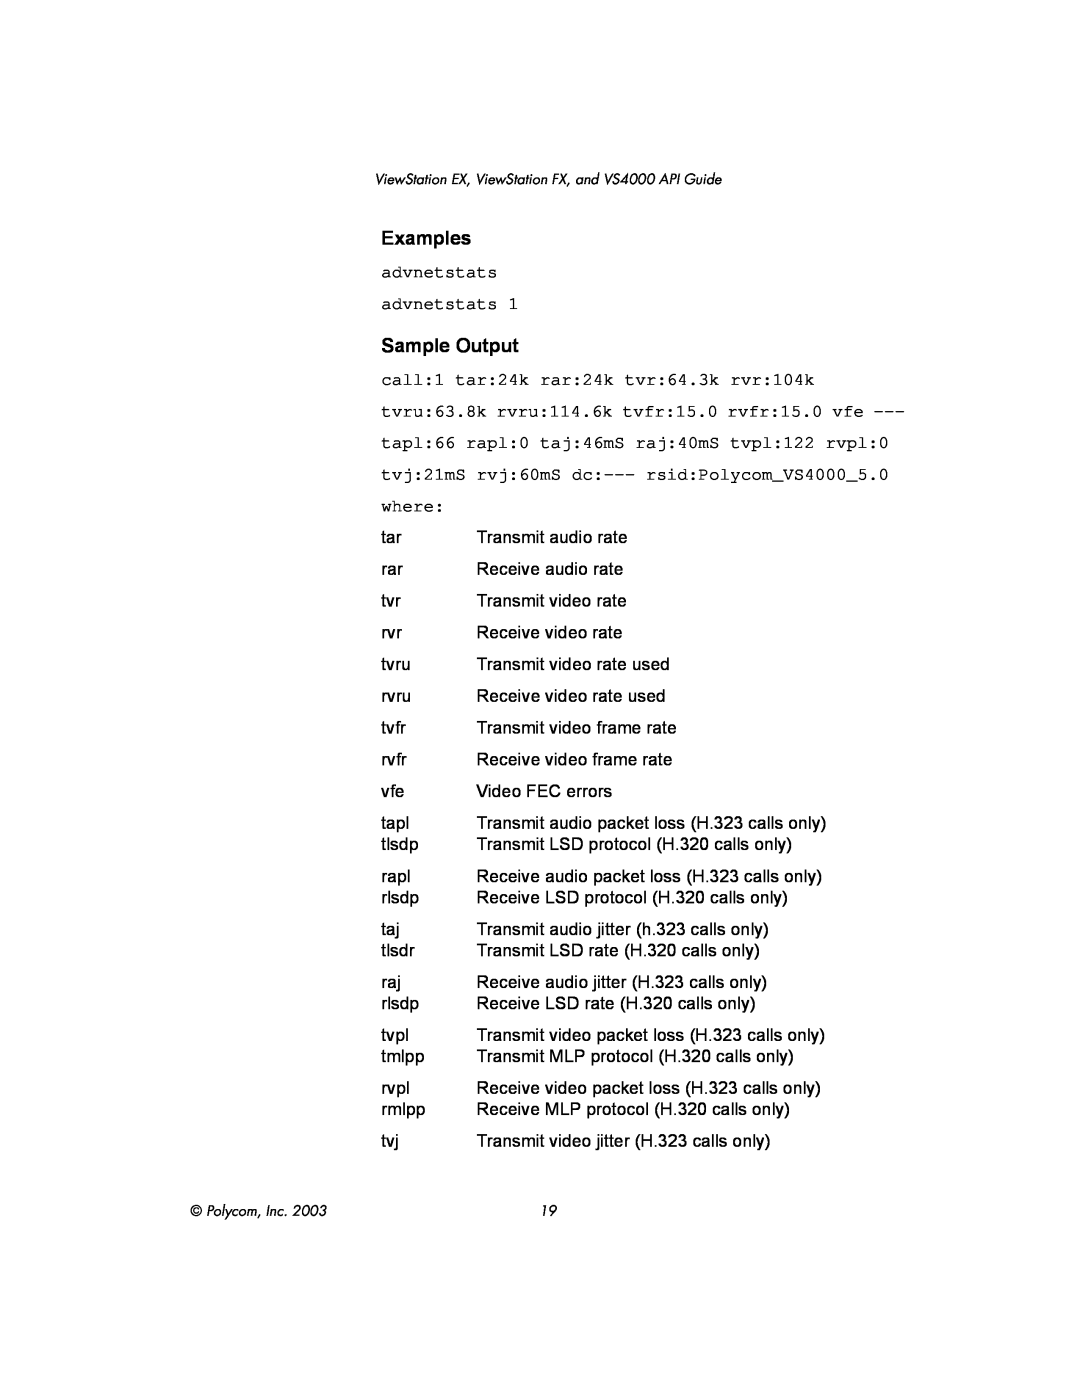 Polycom VIEWSTATION EX manual Sample Output, Examples 